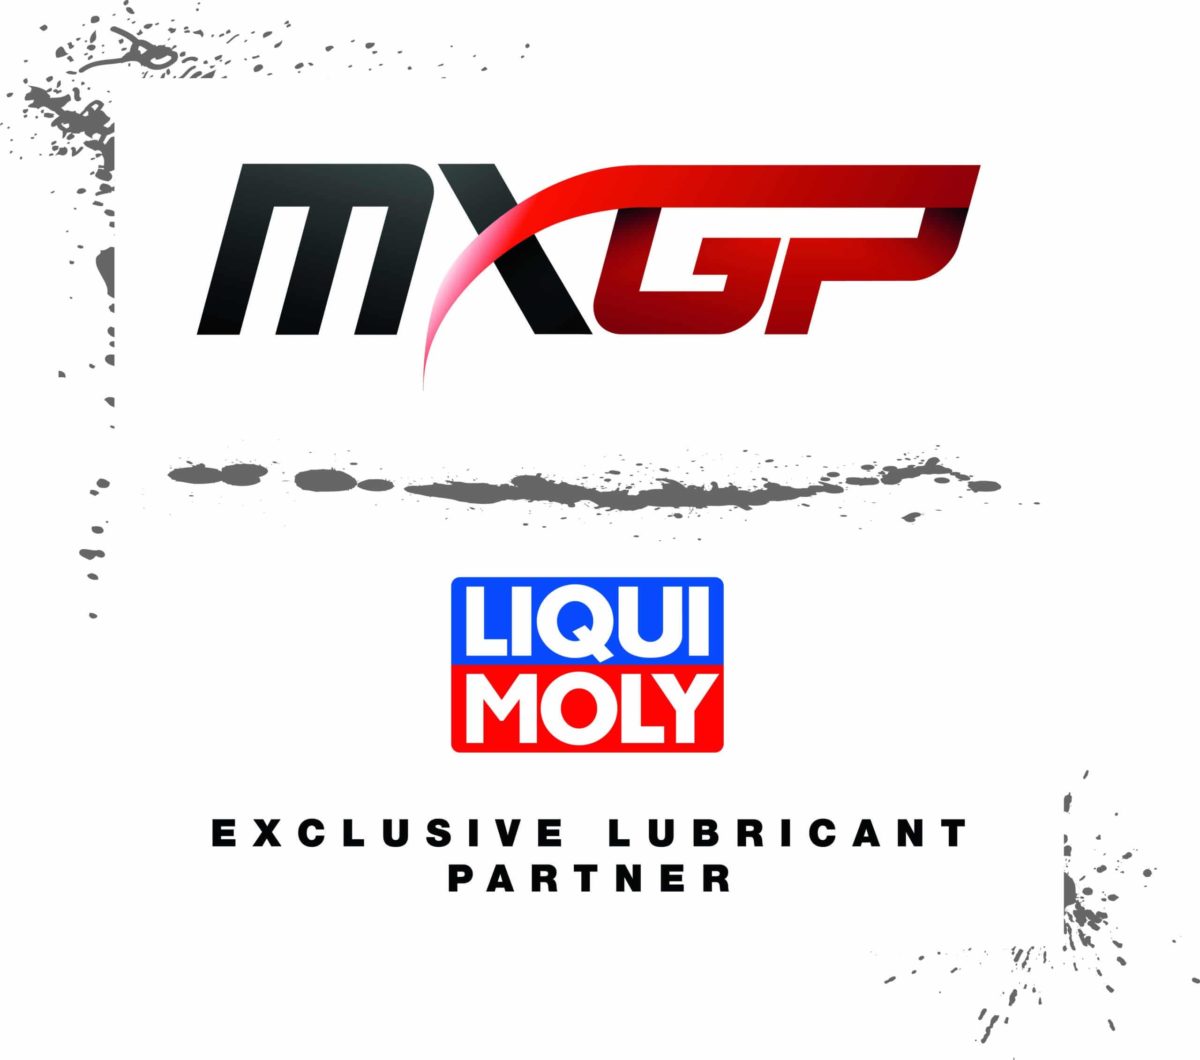 MXGP Lubricant Partner is LIQUI MOLY